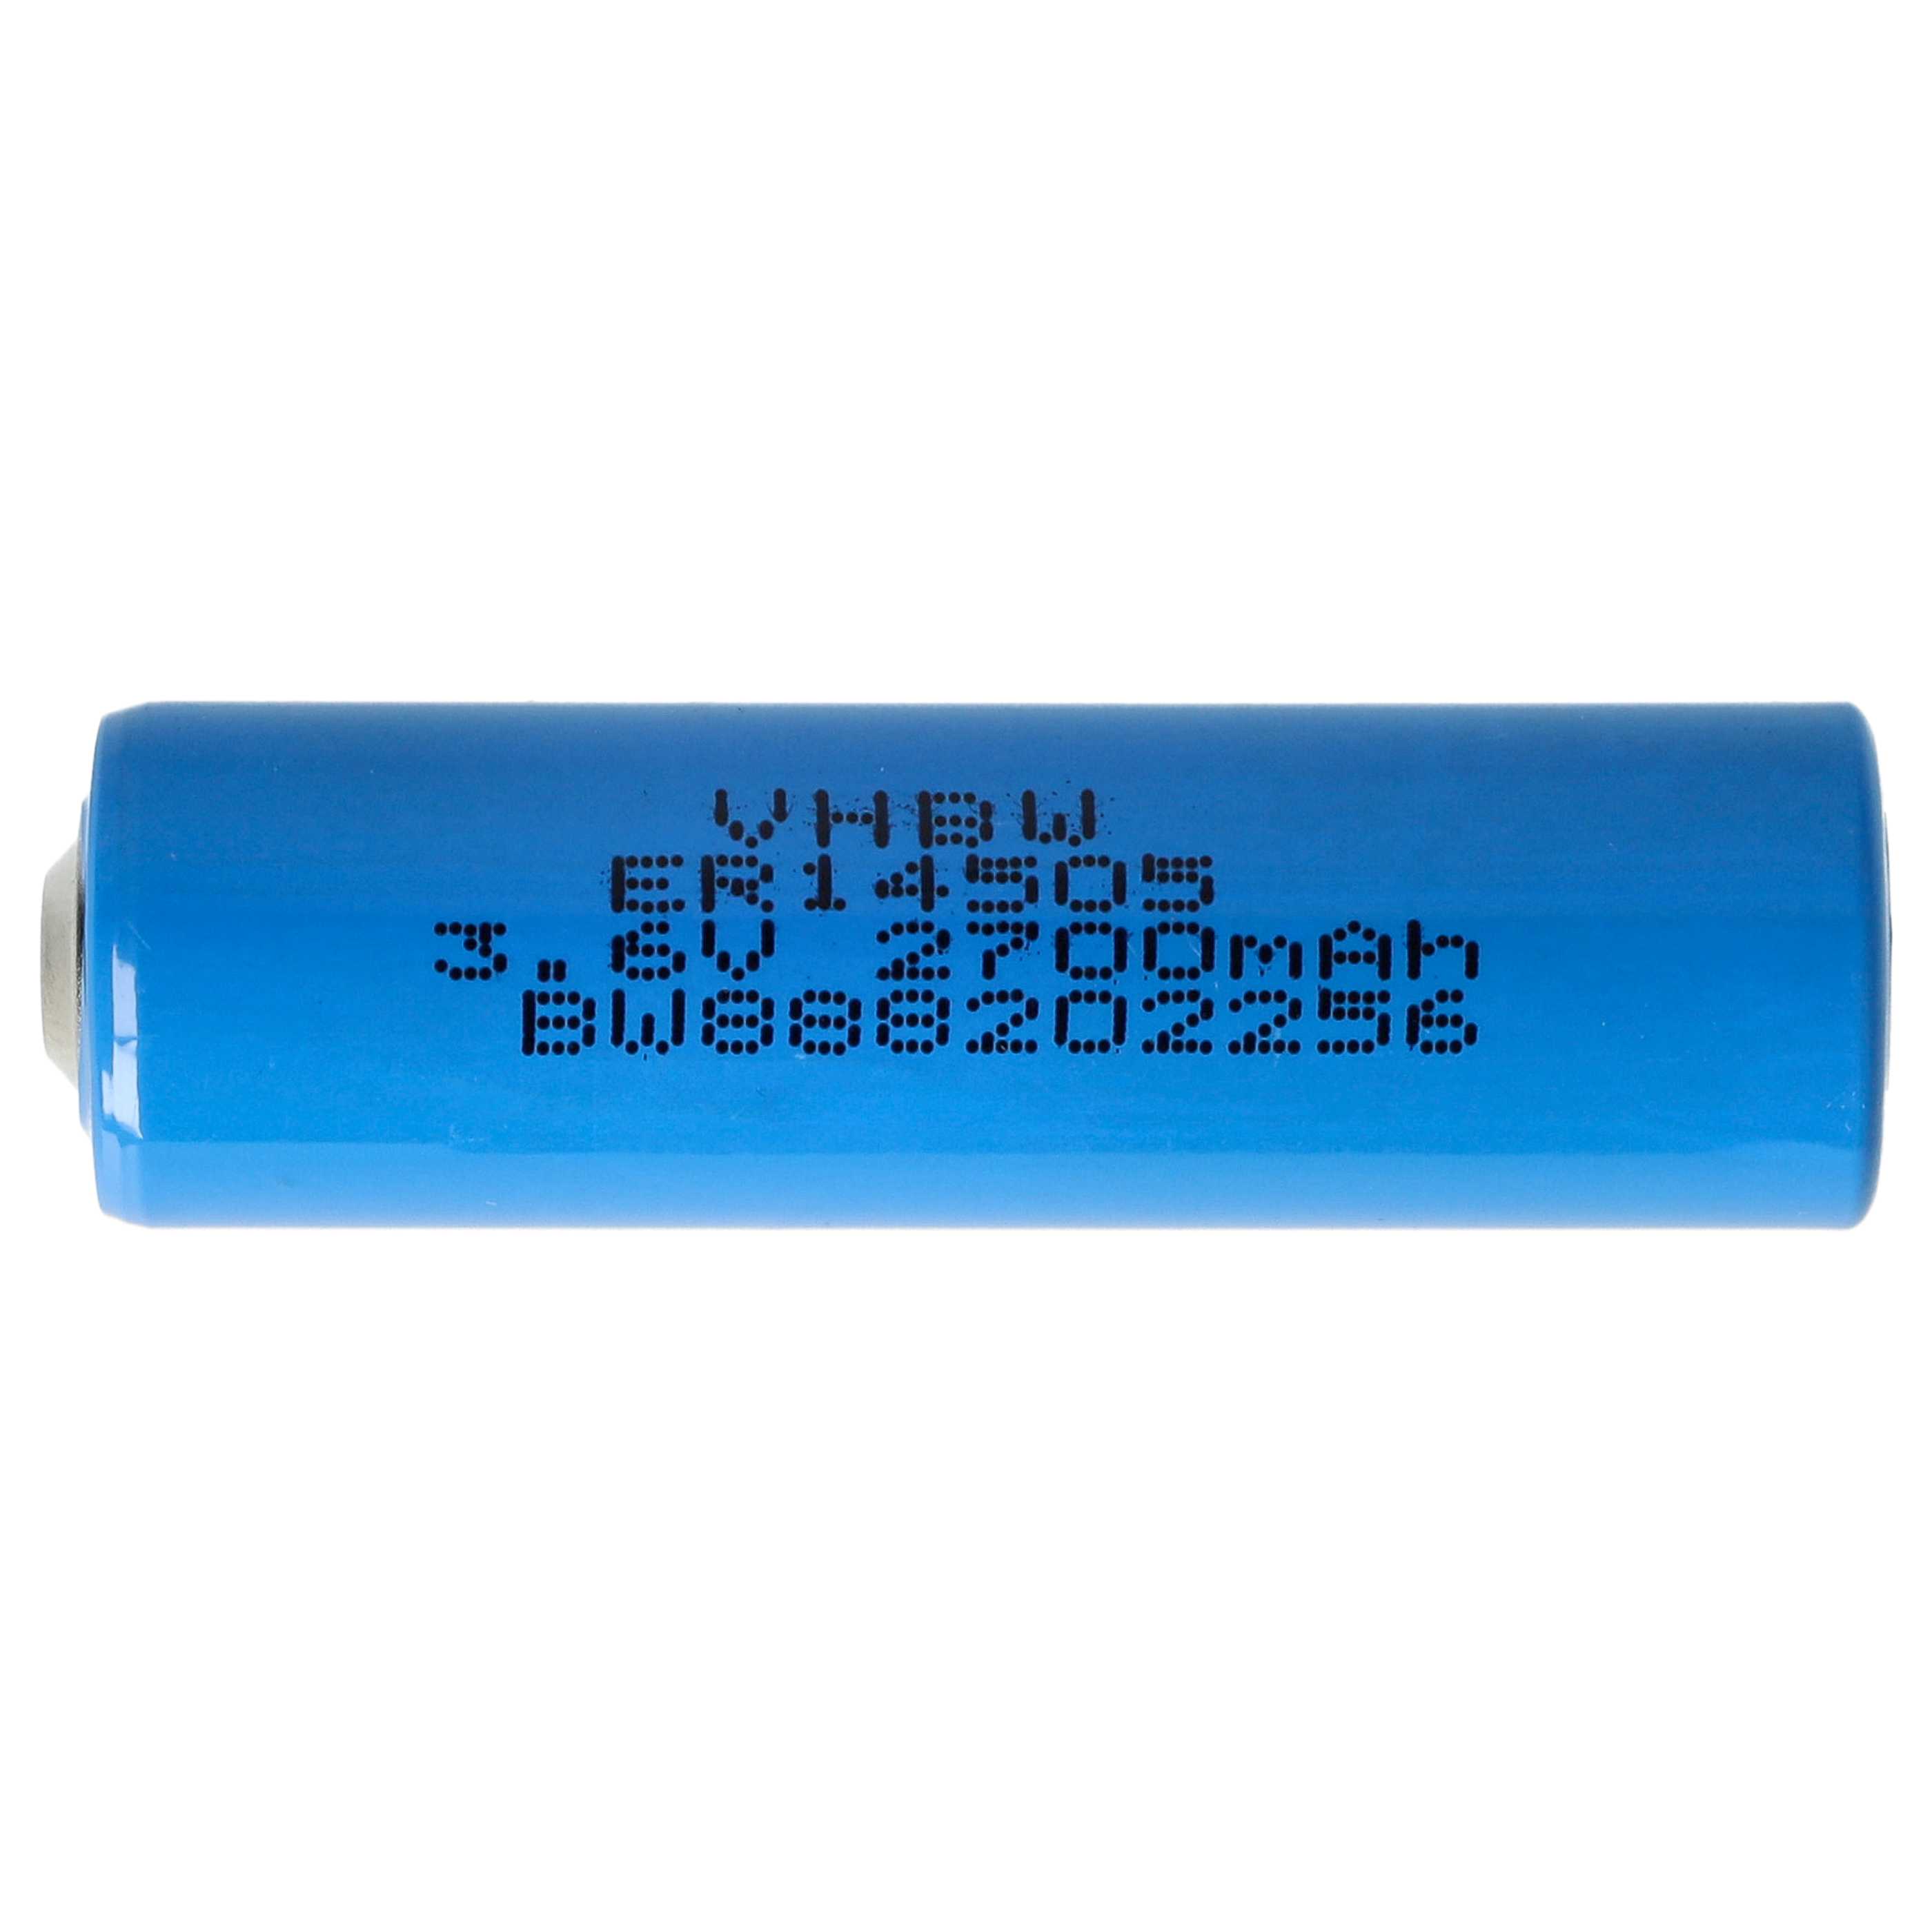 ER14250 Premium Battery for Viessmann Trimatik, Trimatik 2 - 2700mAh 3.6V Li-SOCl2